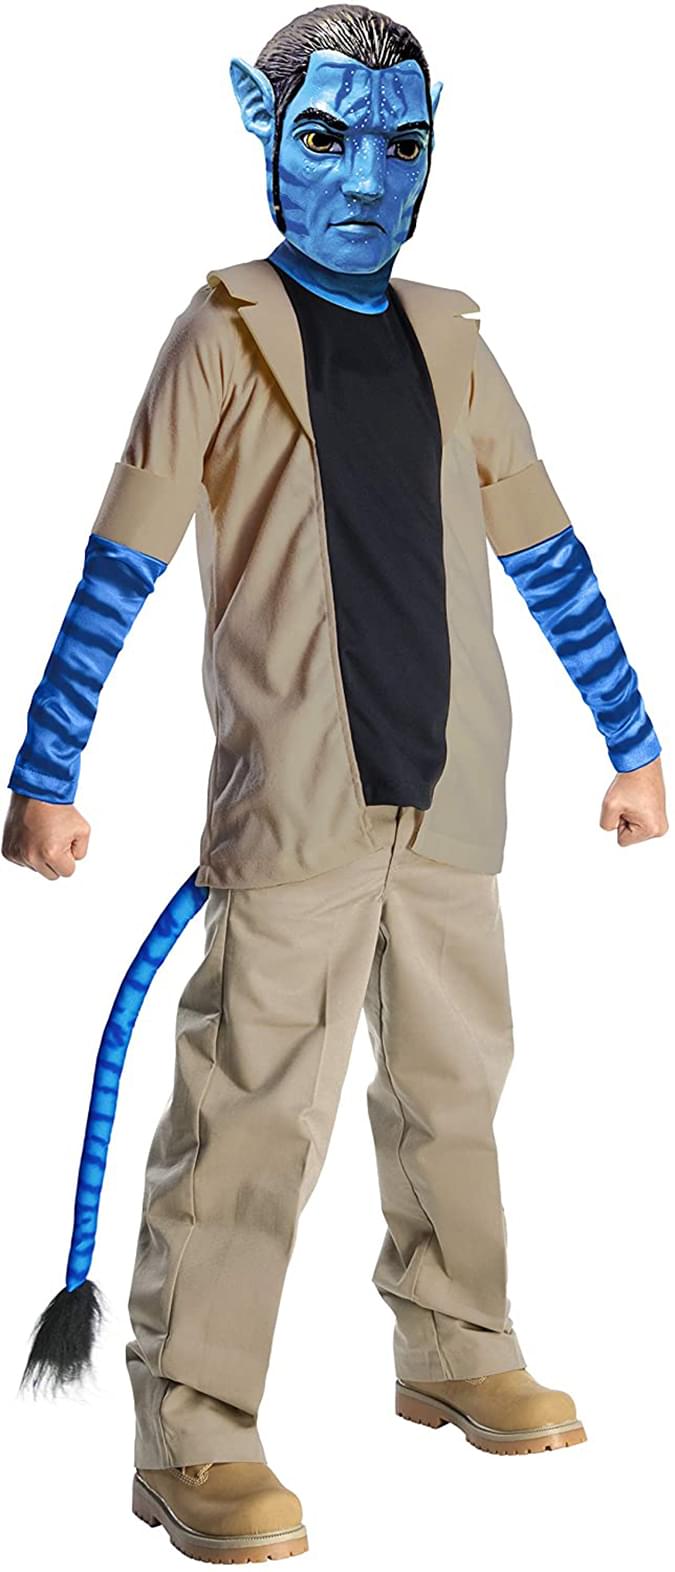 Avatar Jake Sully Costume Child